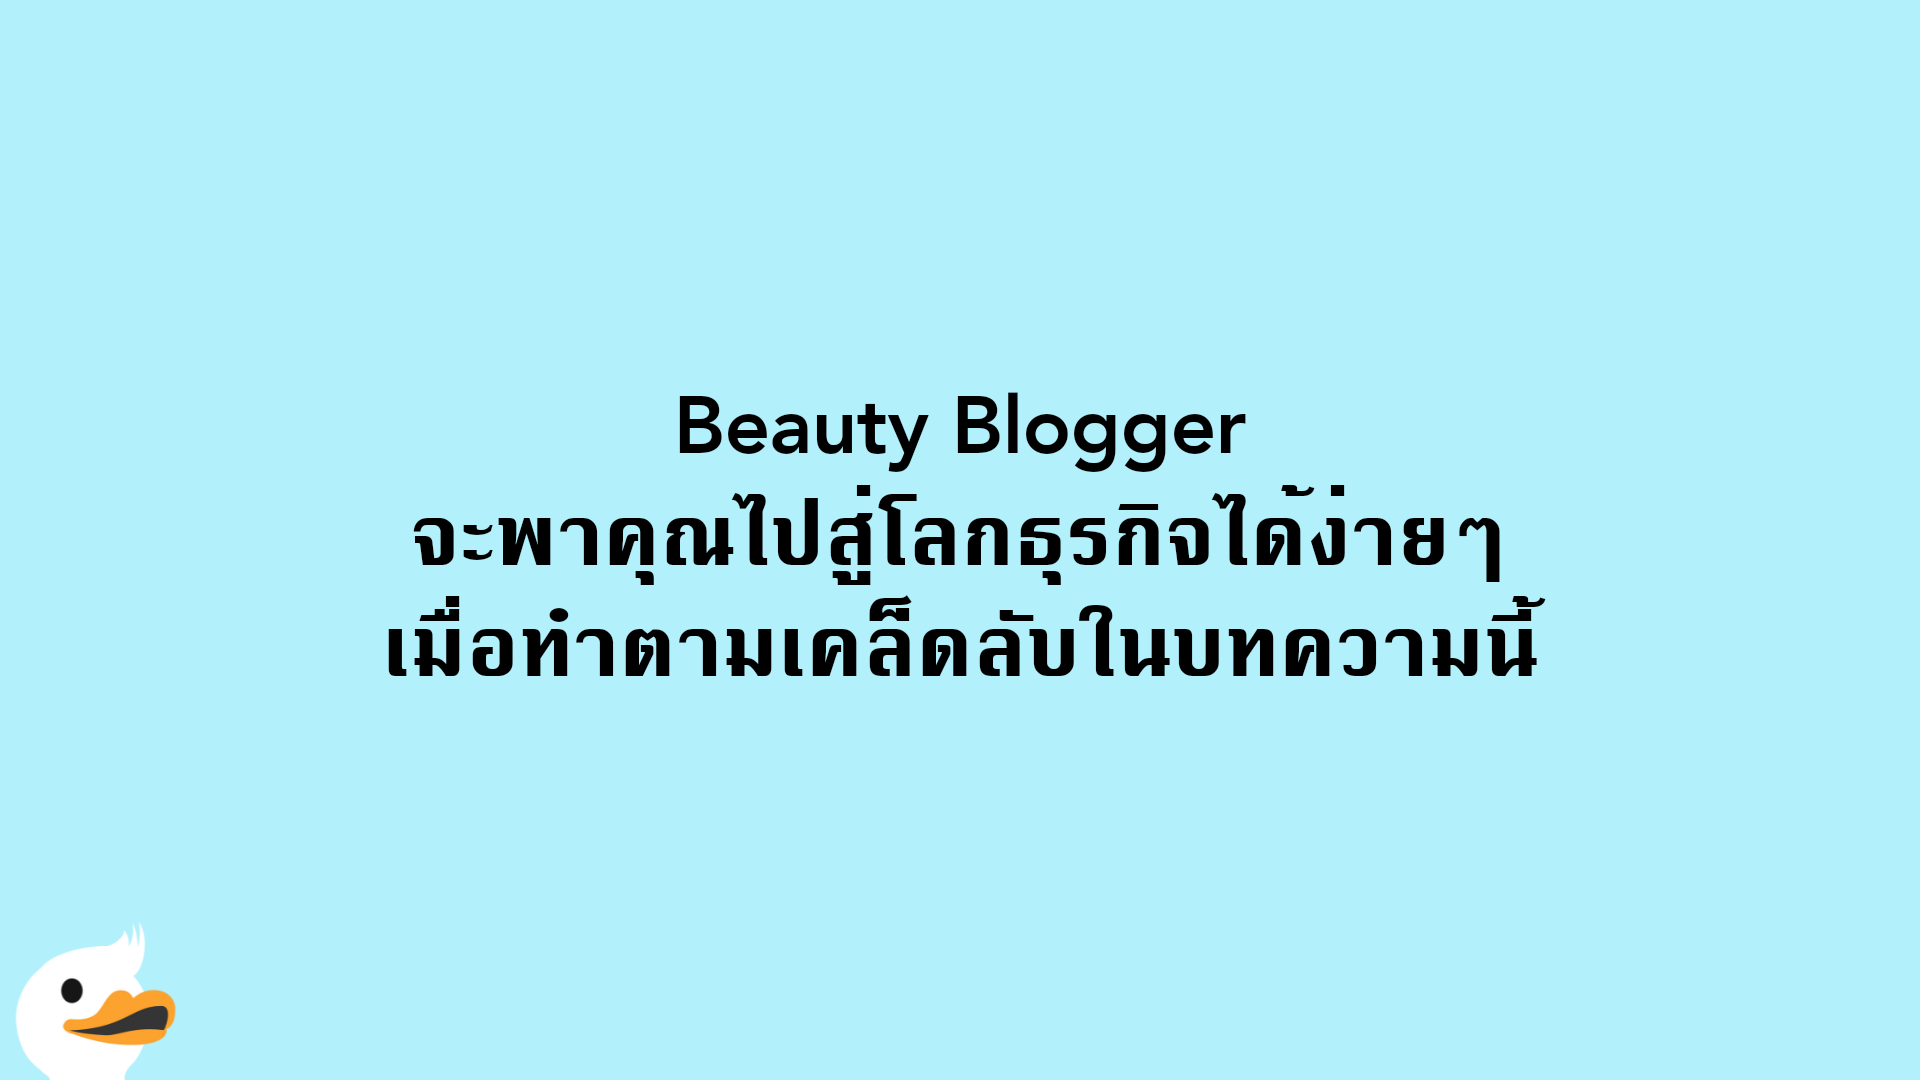 Beauty Blogger จะพาคุณไปสู่โลกธุรกิจได้ง่ายๆ เมื่อทำตามเคล็ดลับในบทความนี้